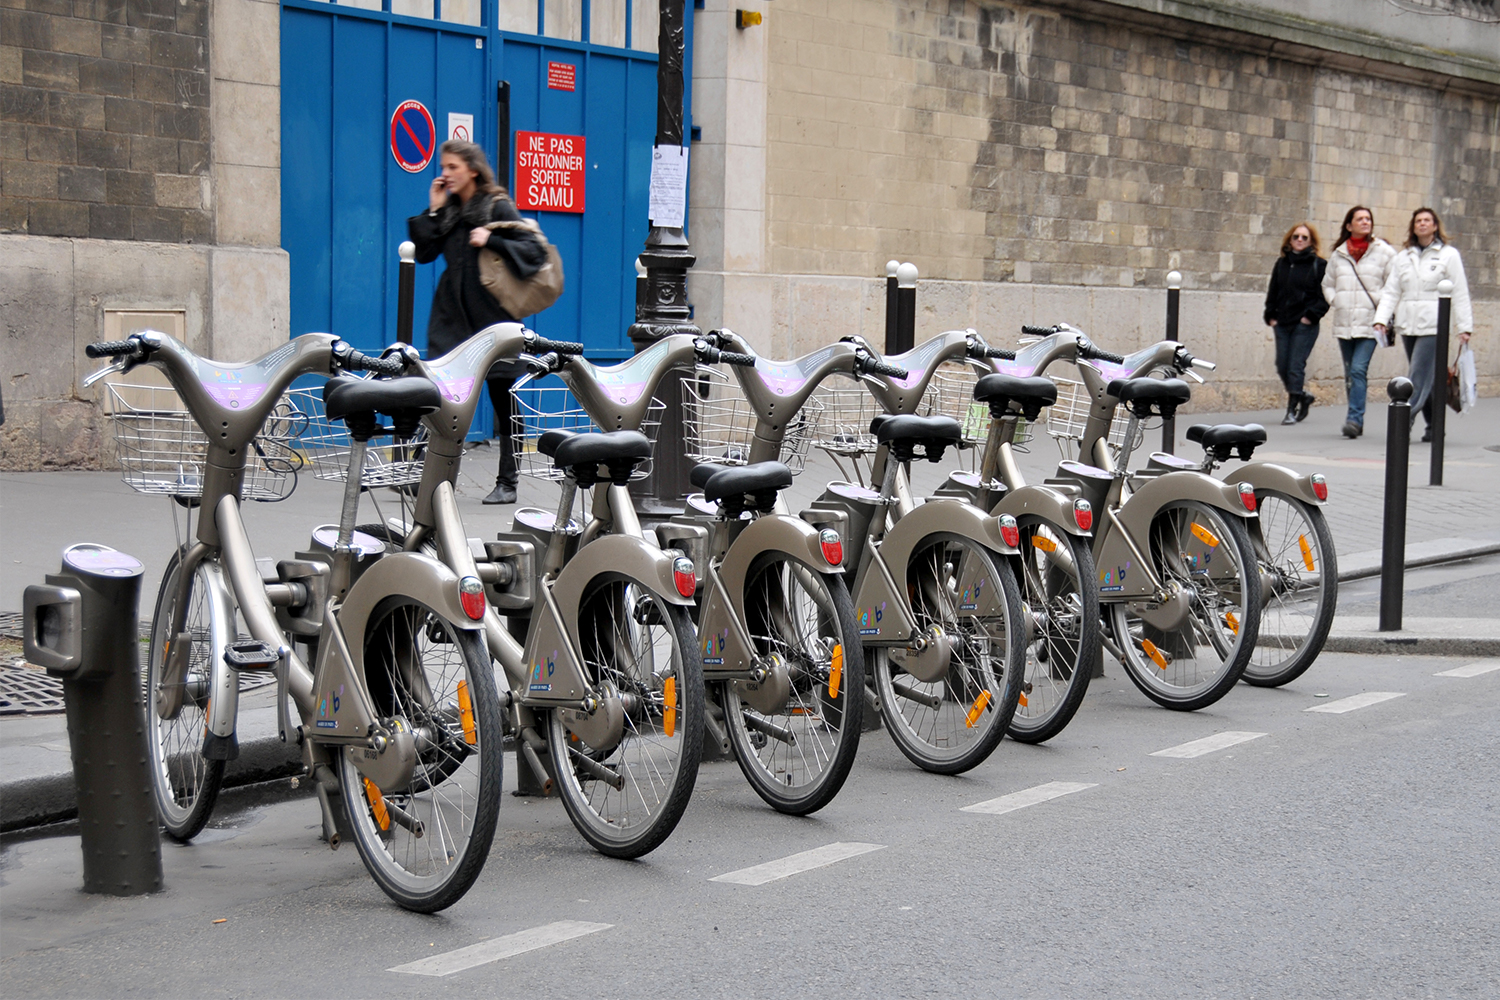 Bikes in Paris, France